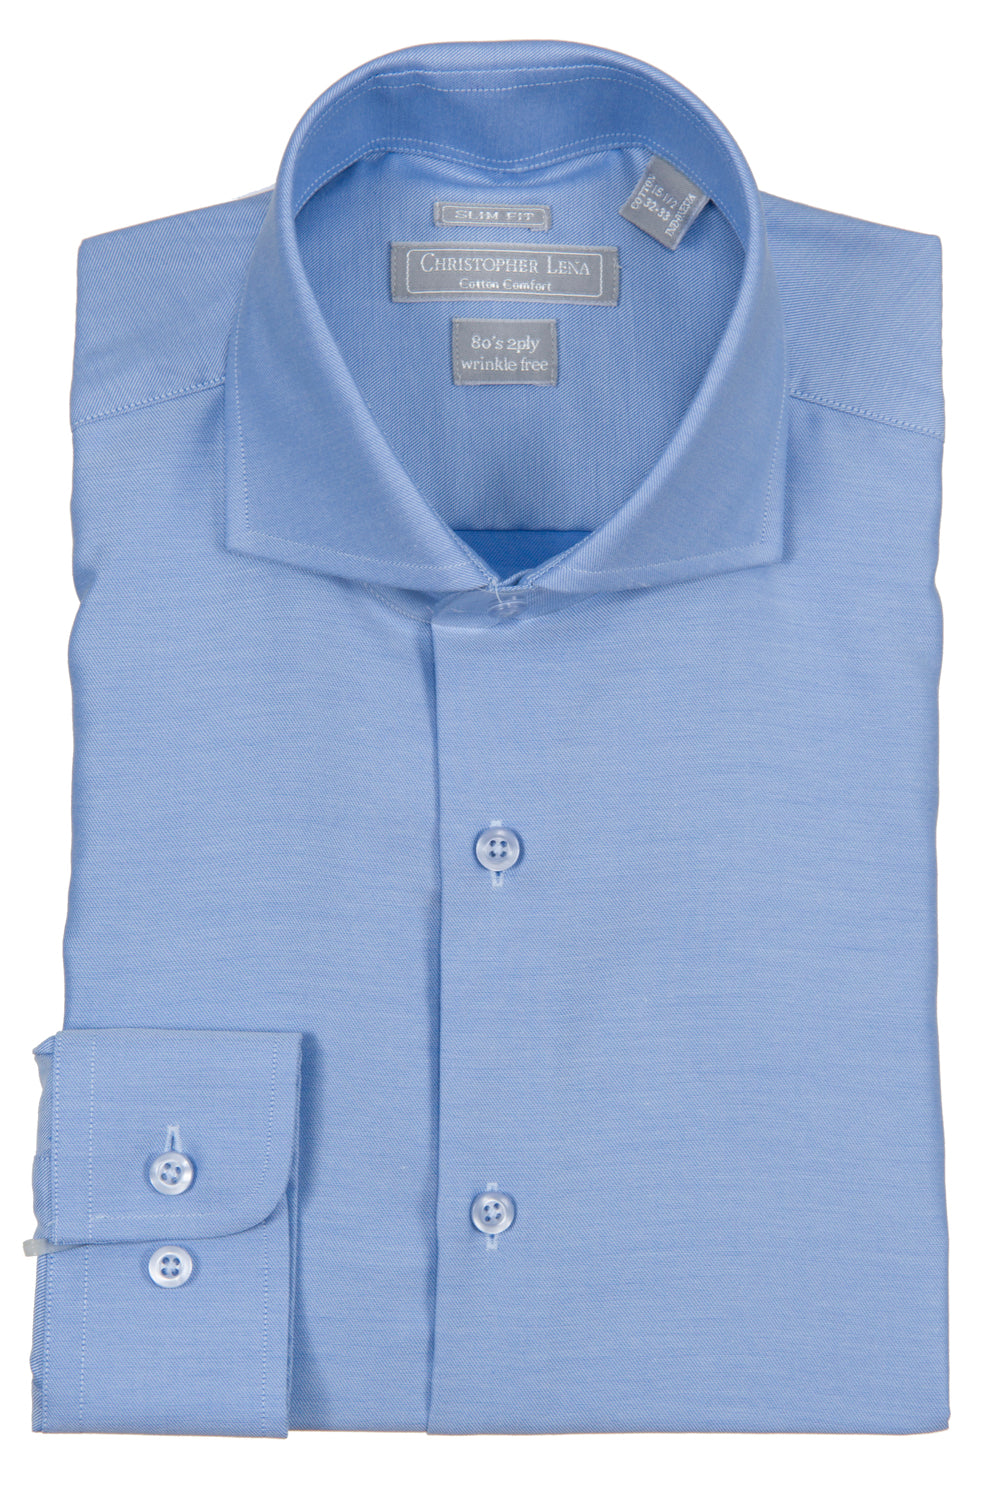 Christopher Lena - White -Dress Shirt - 100% Cotton - 80's 2-ply - Wrinkle Free - Slim Fit